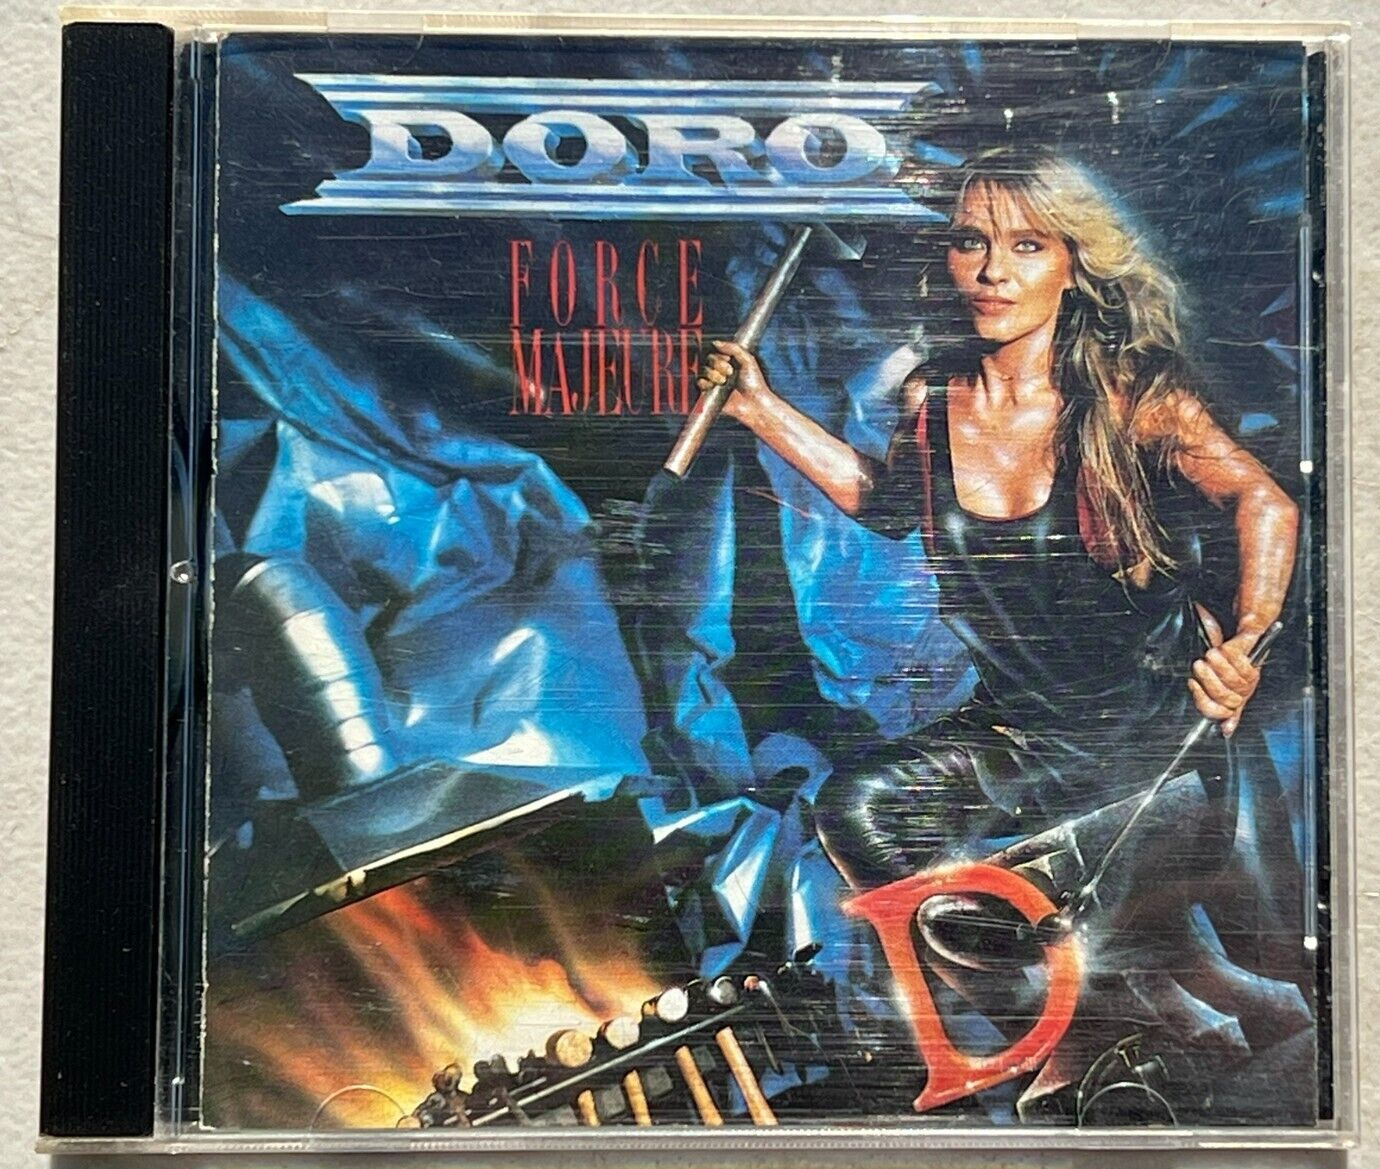 DORO PESCH FORCE MAJEURE WARLOCK USED CD